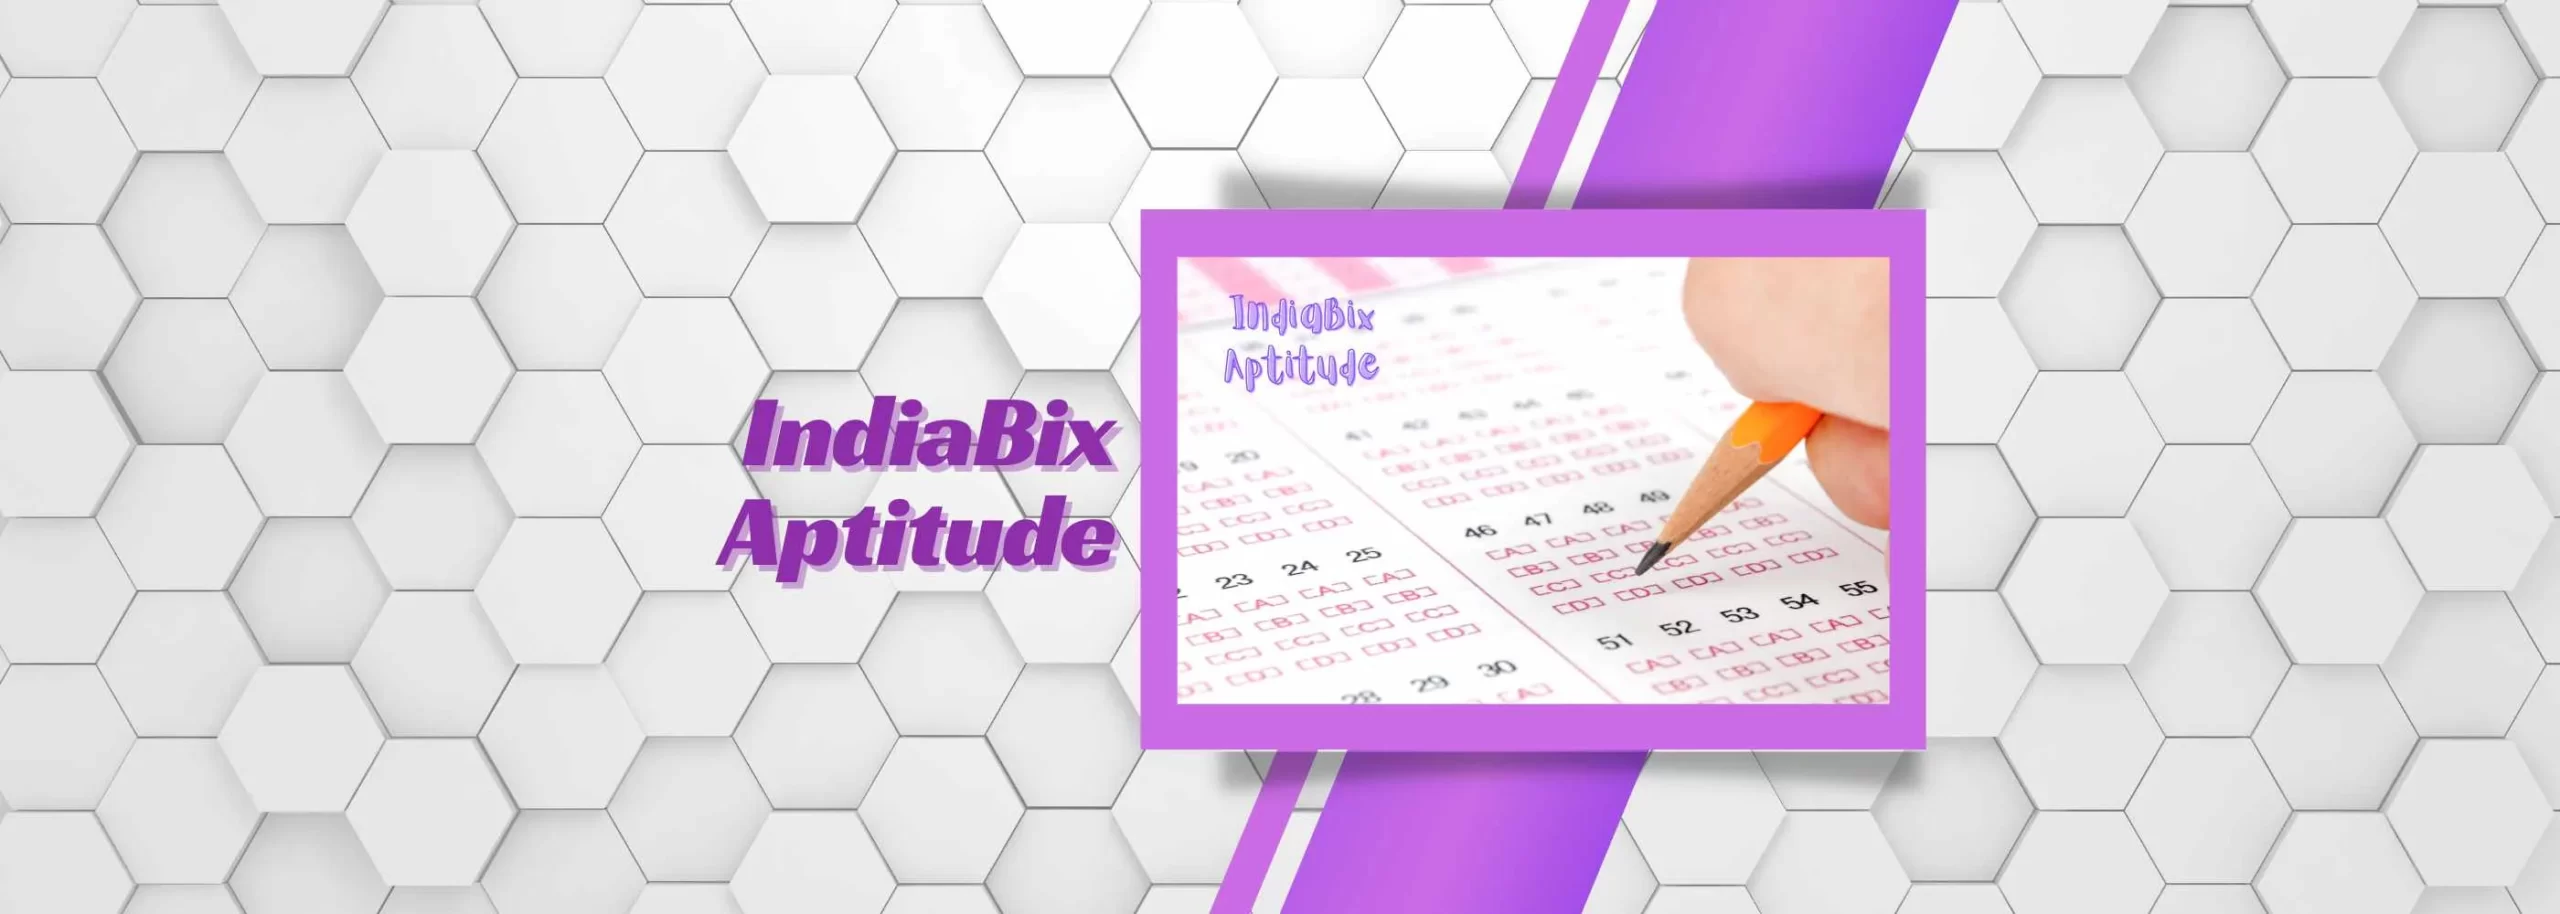 Indiabix Aptitude Test With Answers Pdf